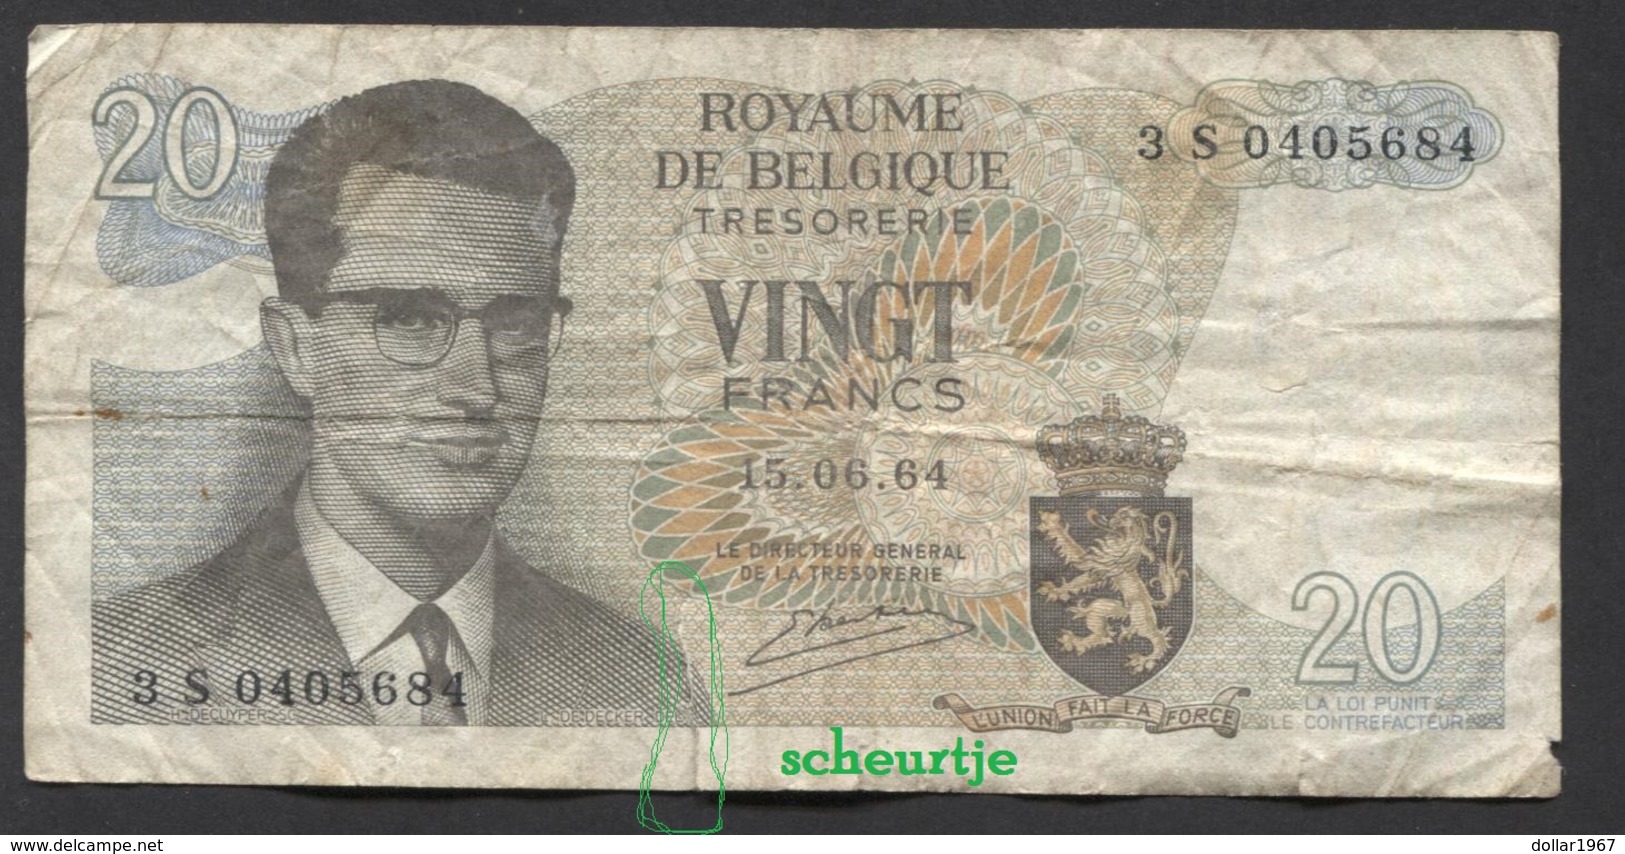 België Belgique Belgium 15 06 1964 -  20 Francs Atomium Baudouin. 3 S 0405684 - 20 Francs